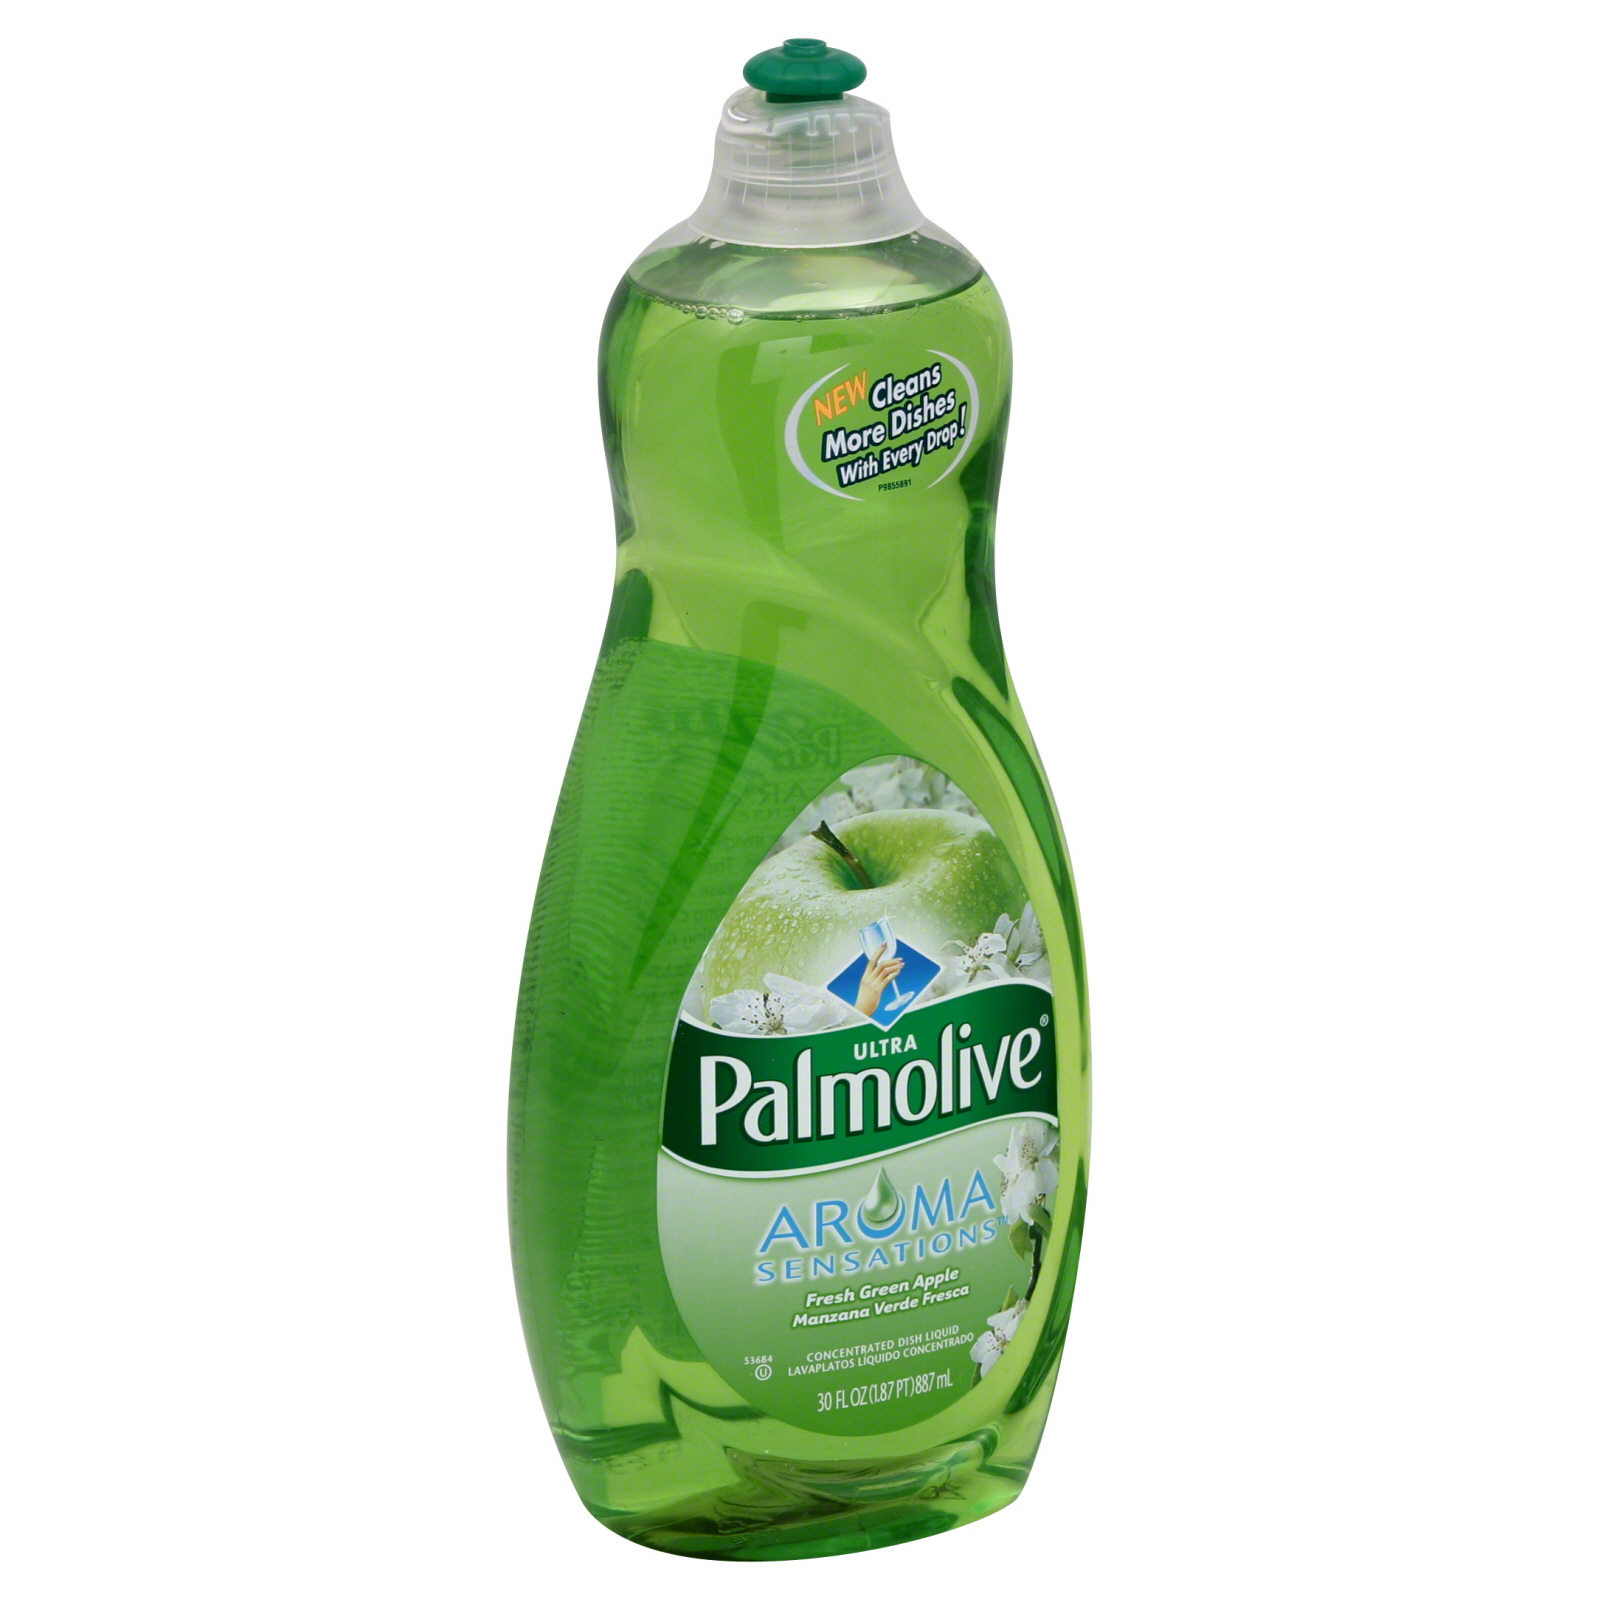 Palmolive Aroma Sensations Dish Liquid, Concentrated, Ultra, Fresh Green Apple, 30 fl oz (1.87 pt) 887 ml